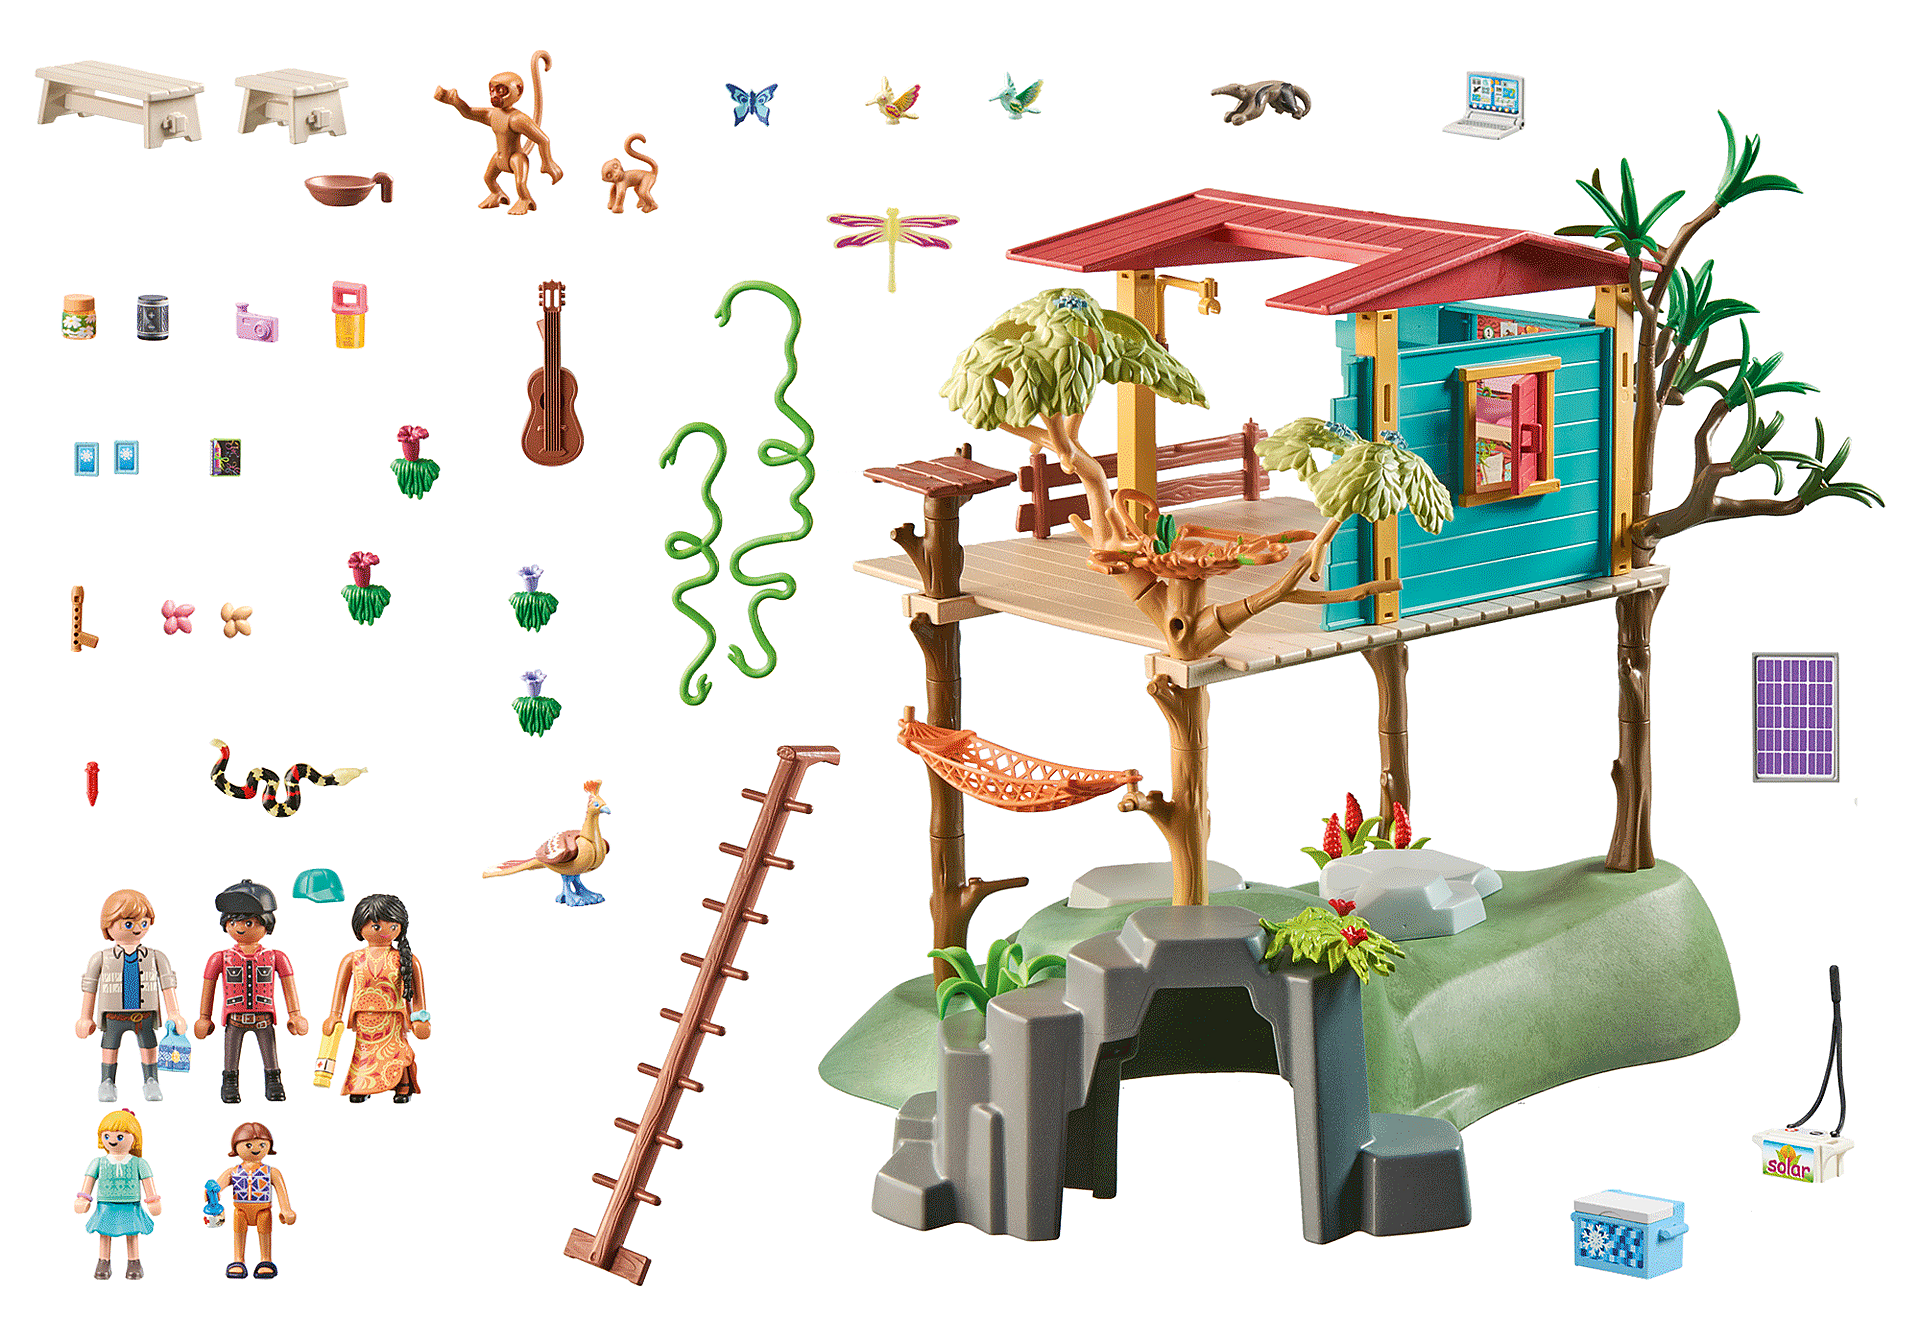 Playmobil Family Tree House – The Great Rocky Mountain Toy Company